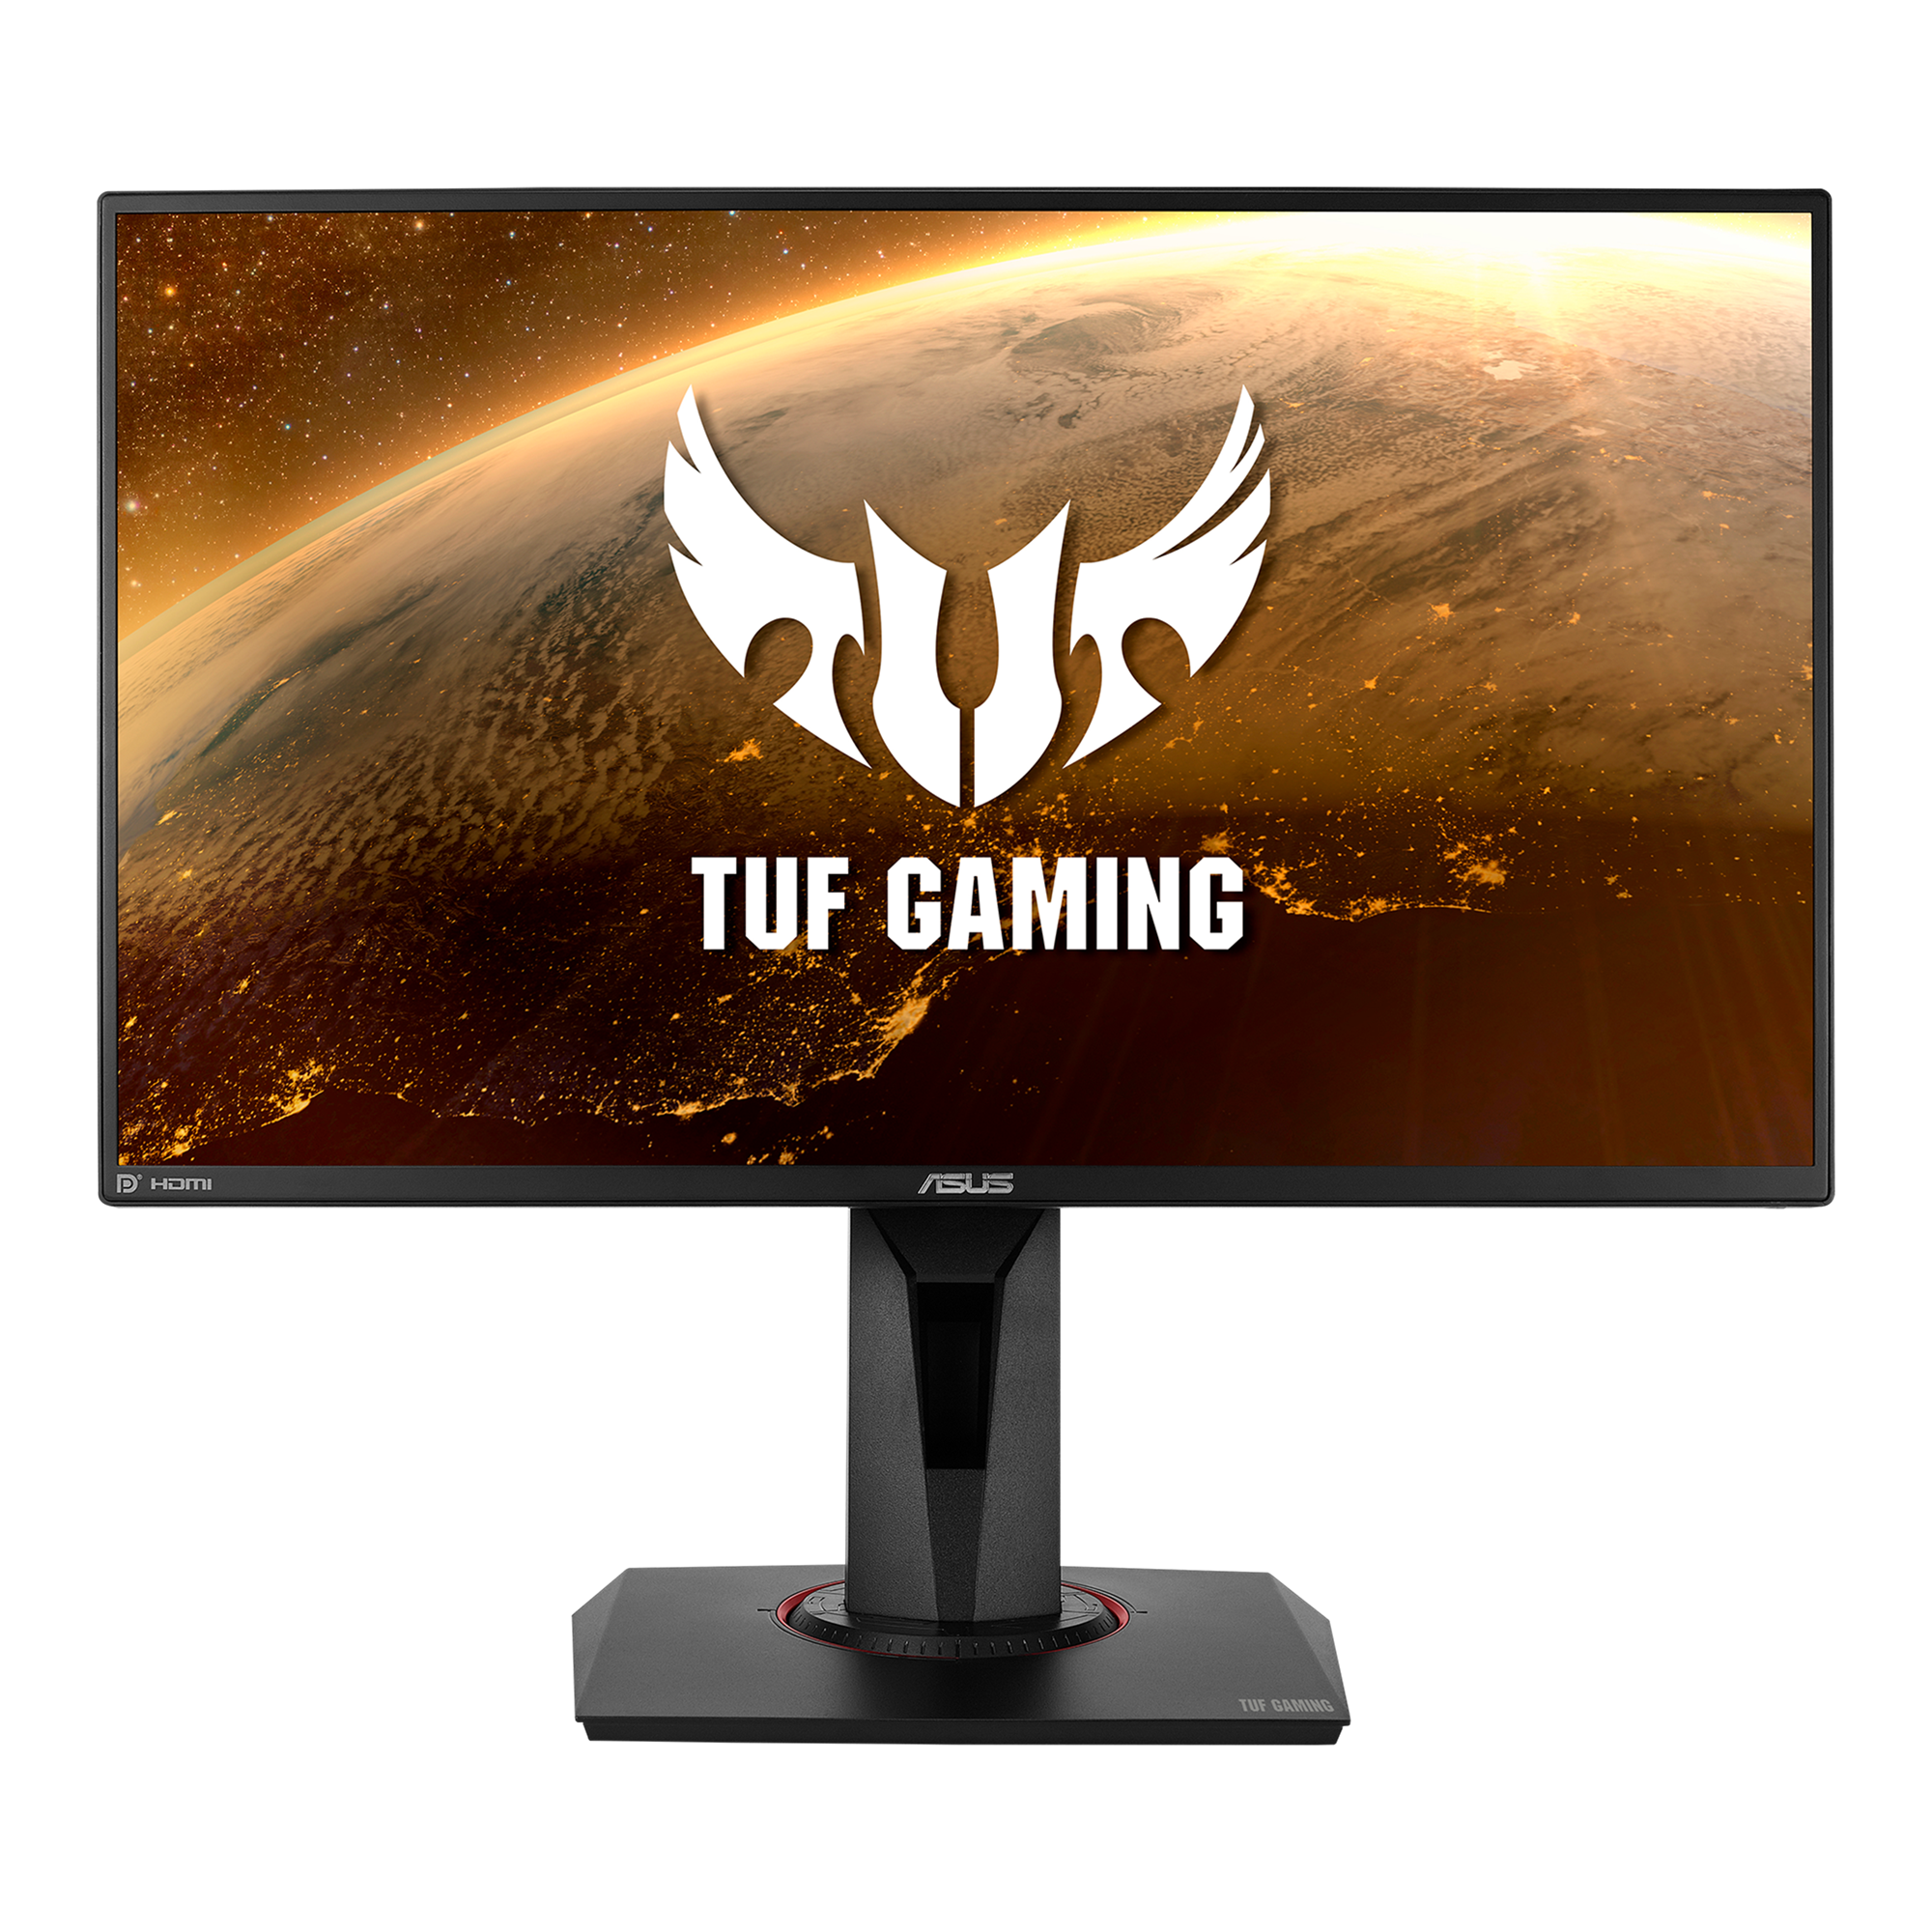 Tuf Gaming Vg259qm Monitors Asus Global